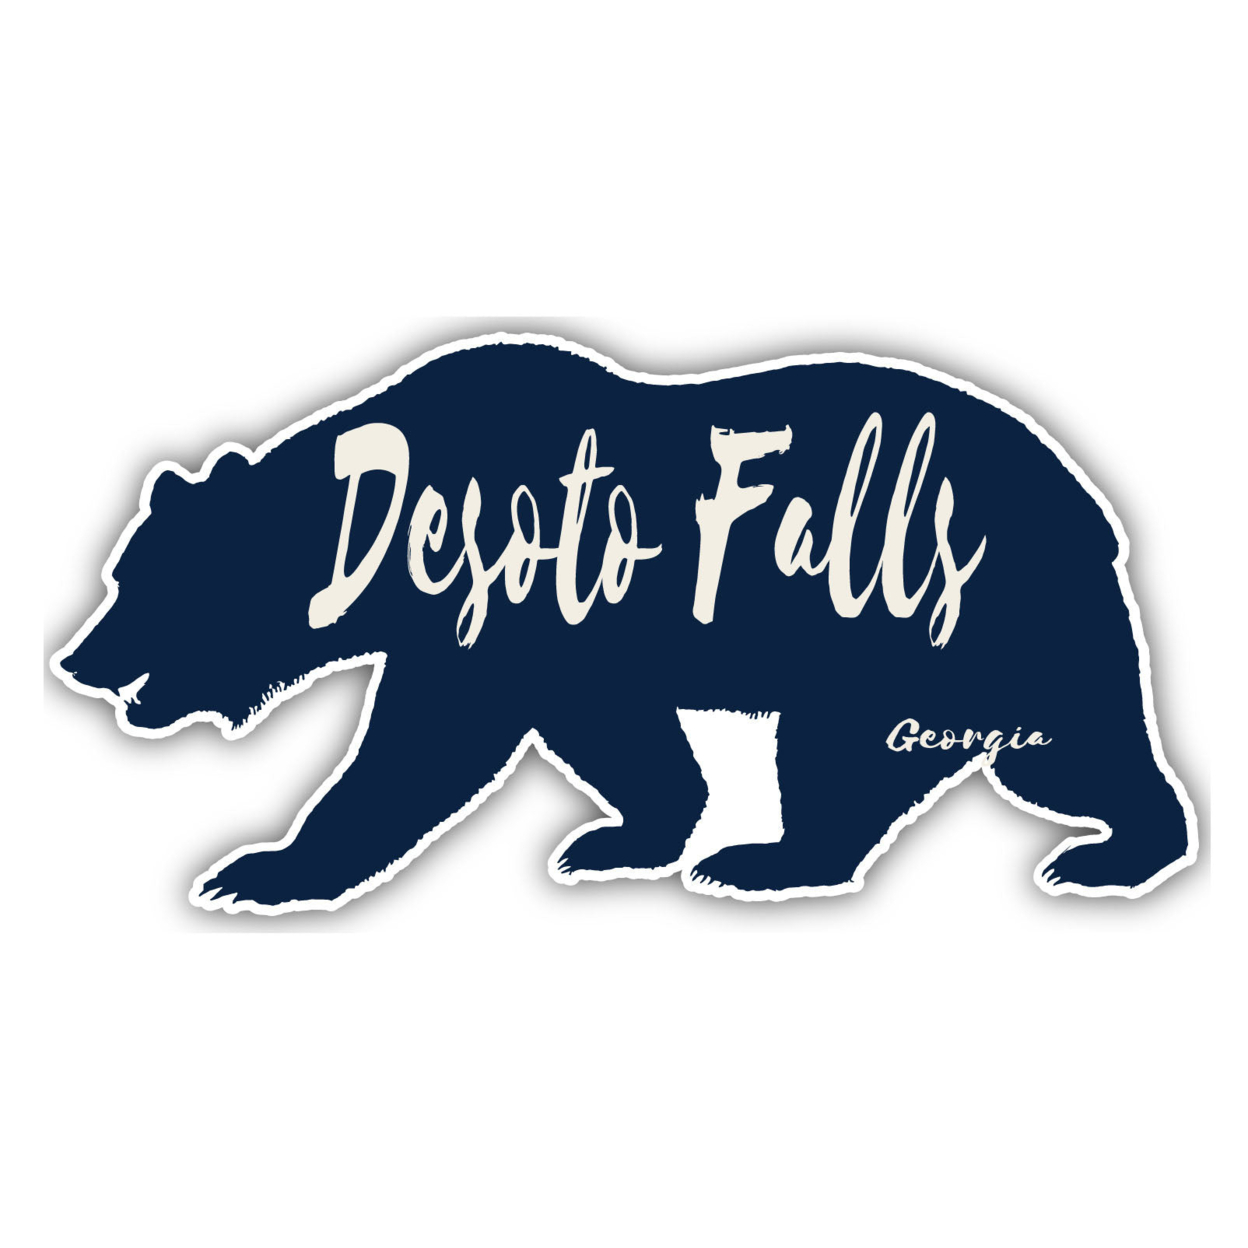 DeSoto Falls Georgia Souvenir Decorative Stickers (Choose Theme And Size) - 4-Pack, 4-Inch, Bear